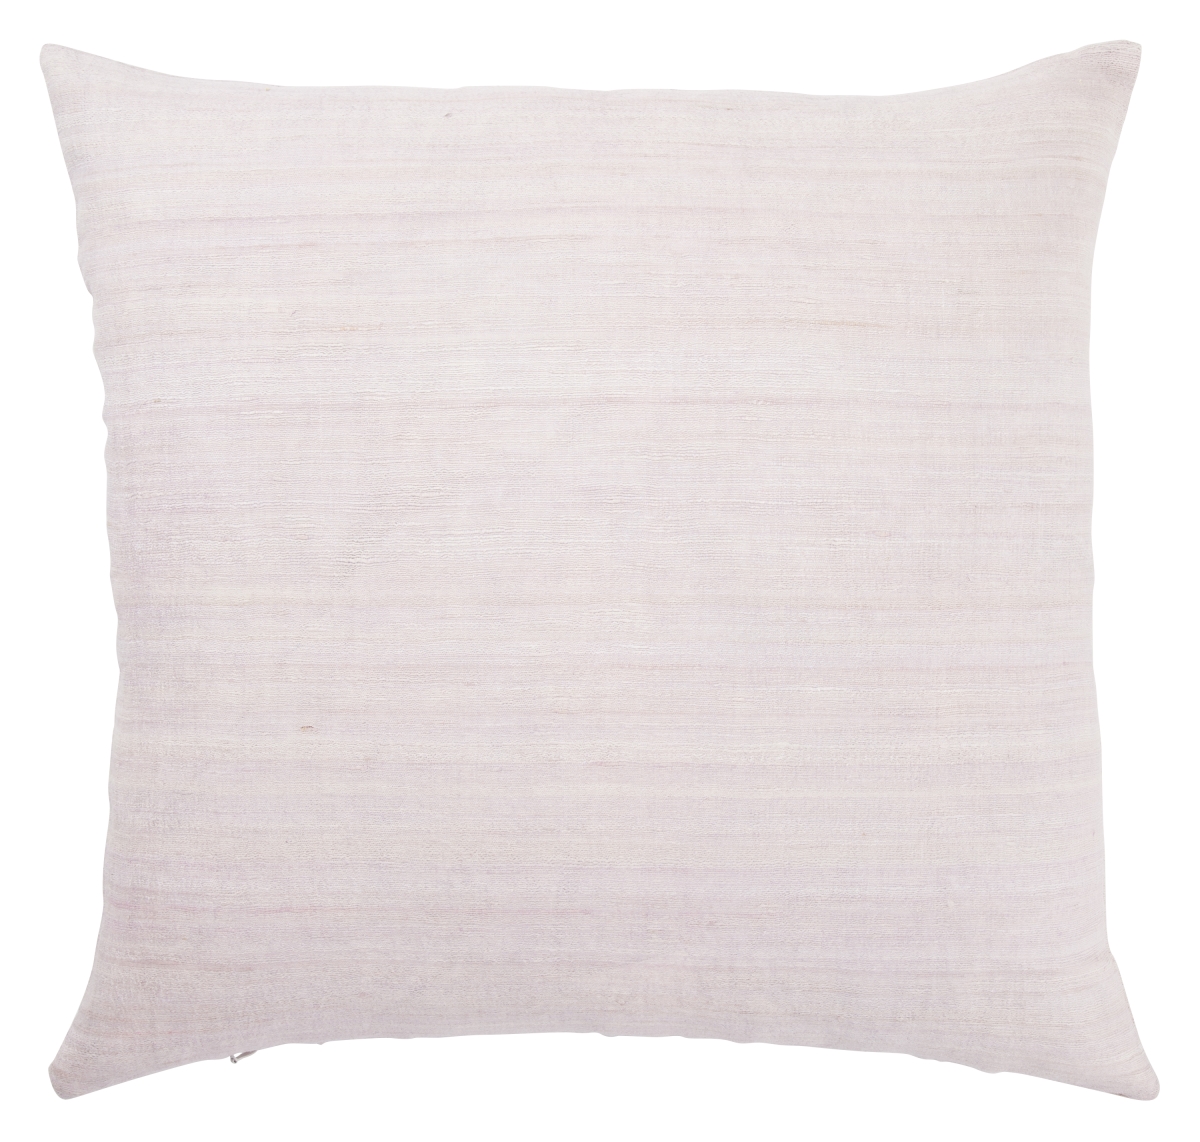 Plw103128 22 X 22 In. Mandarina Carmine Cream & Pink Solid Poly Throw Pillow